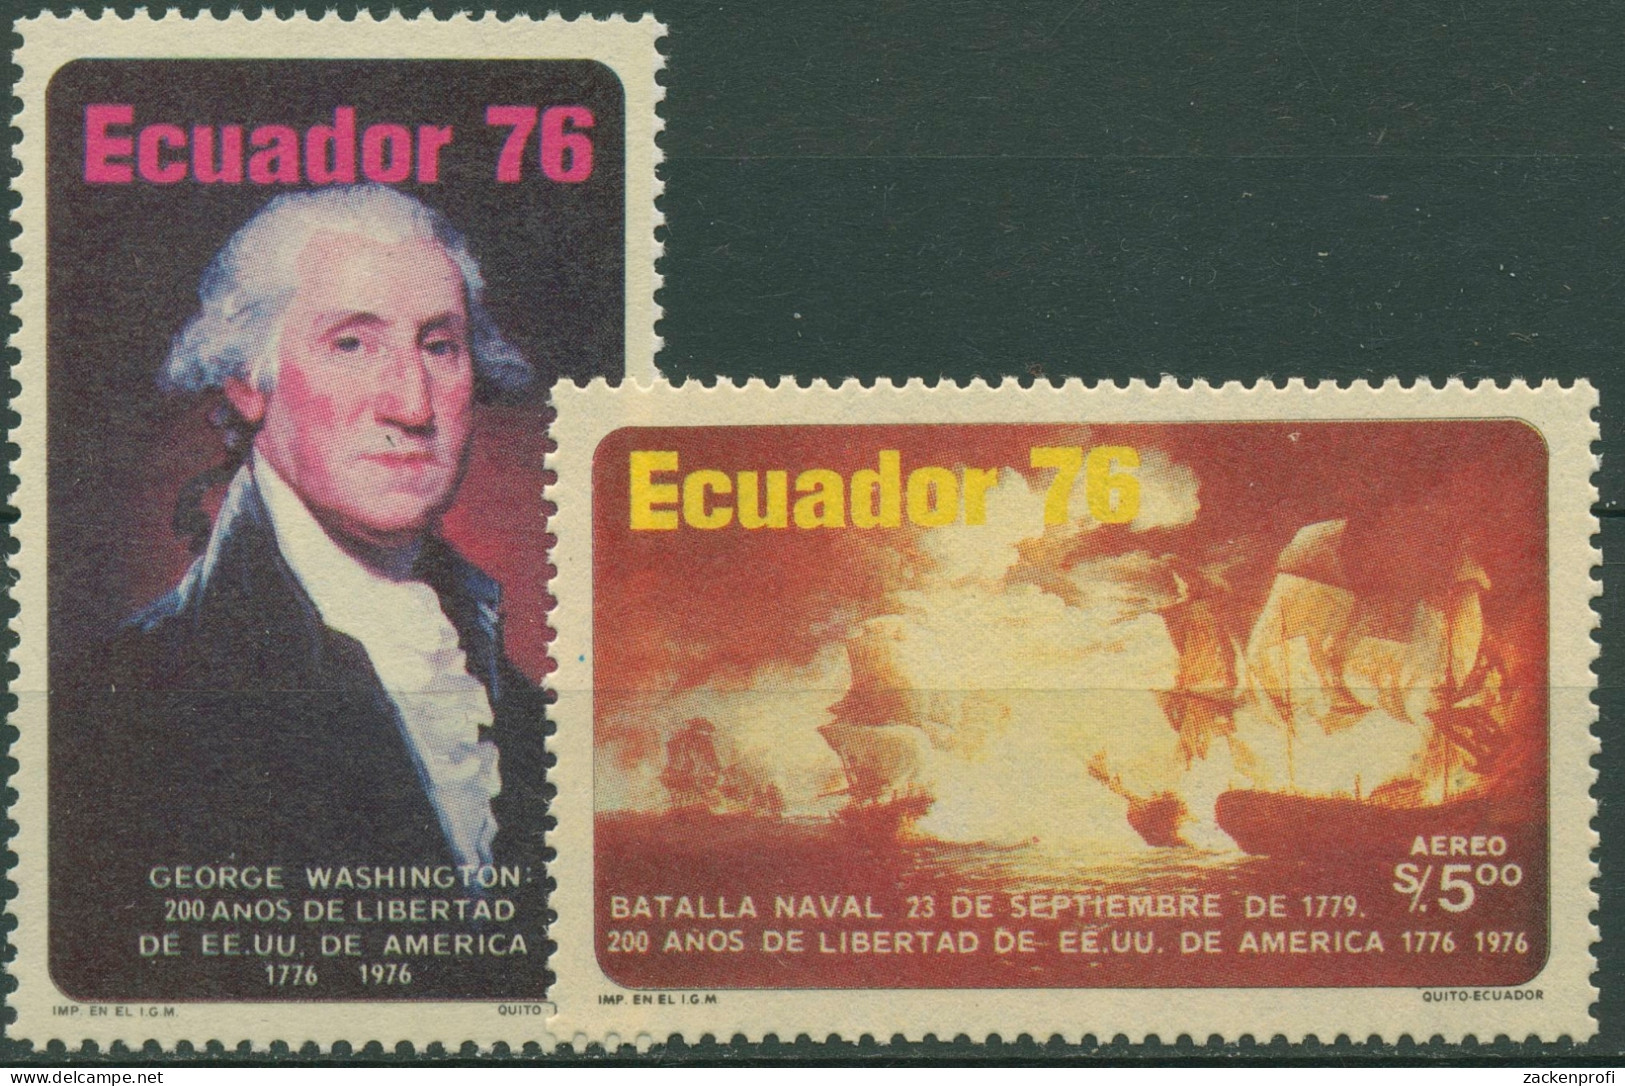 Ecuador 1976 G.Washington Unabhängigkeit Amerikas Seeschlacht 1734/35 Postfrisch - Ecuador